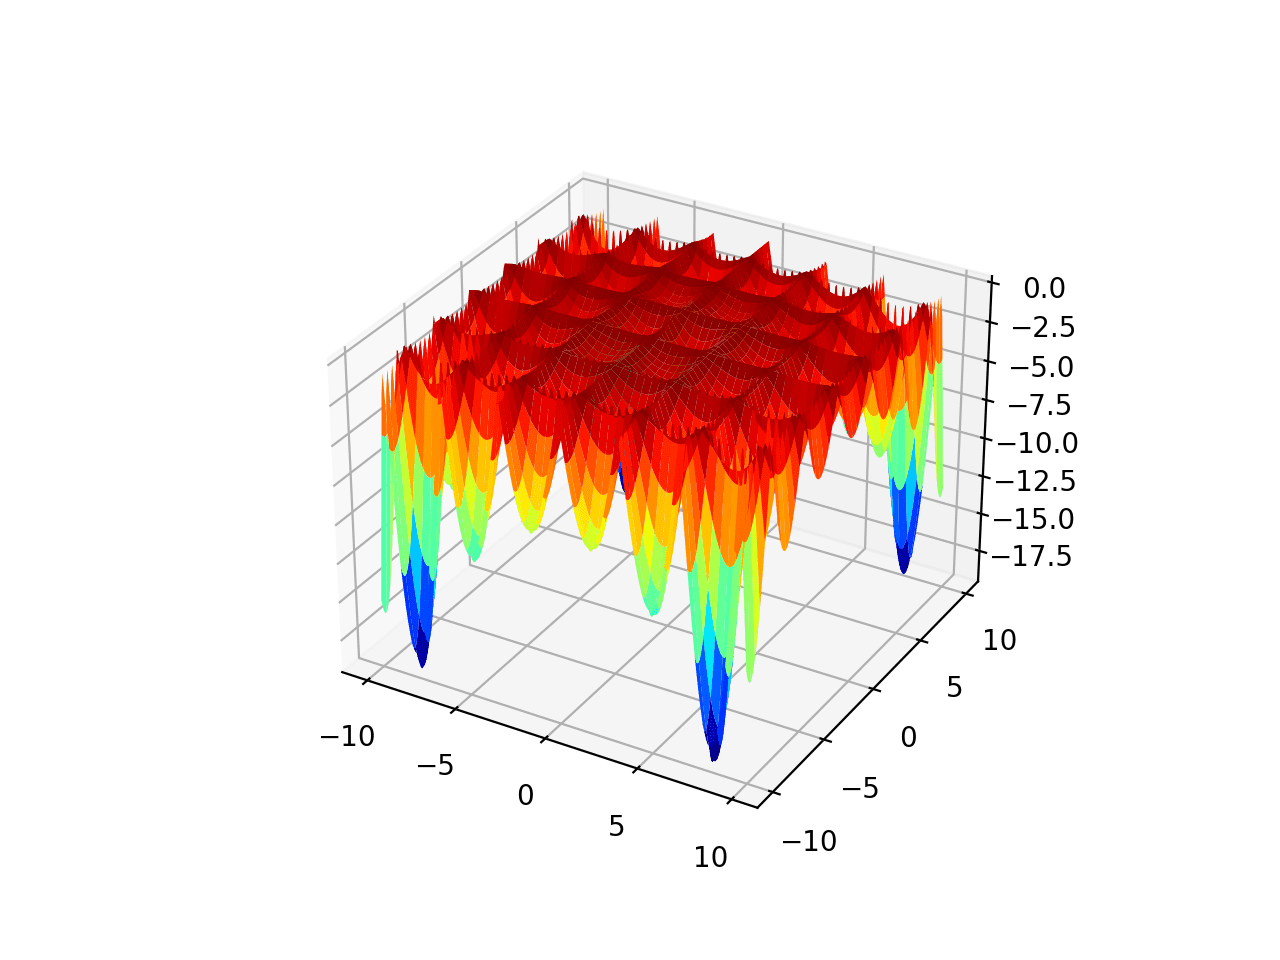 Surface Plot of Multimodal Optimization Function 3